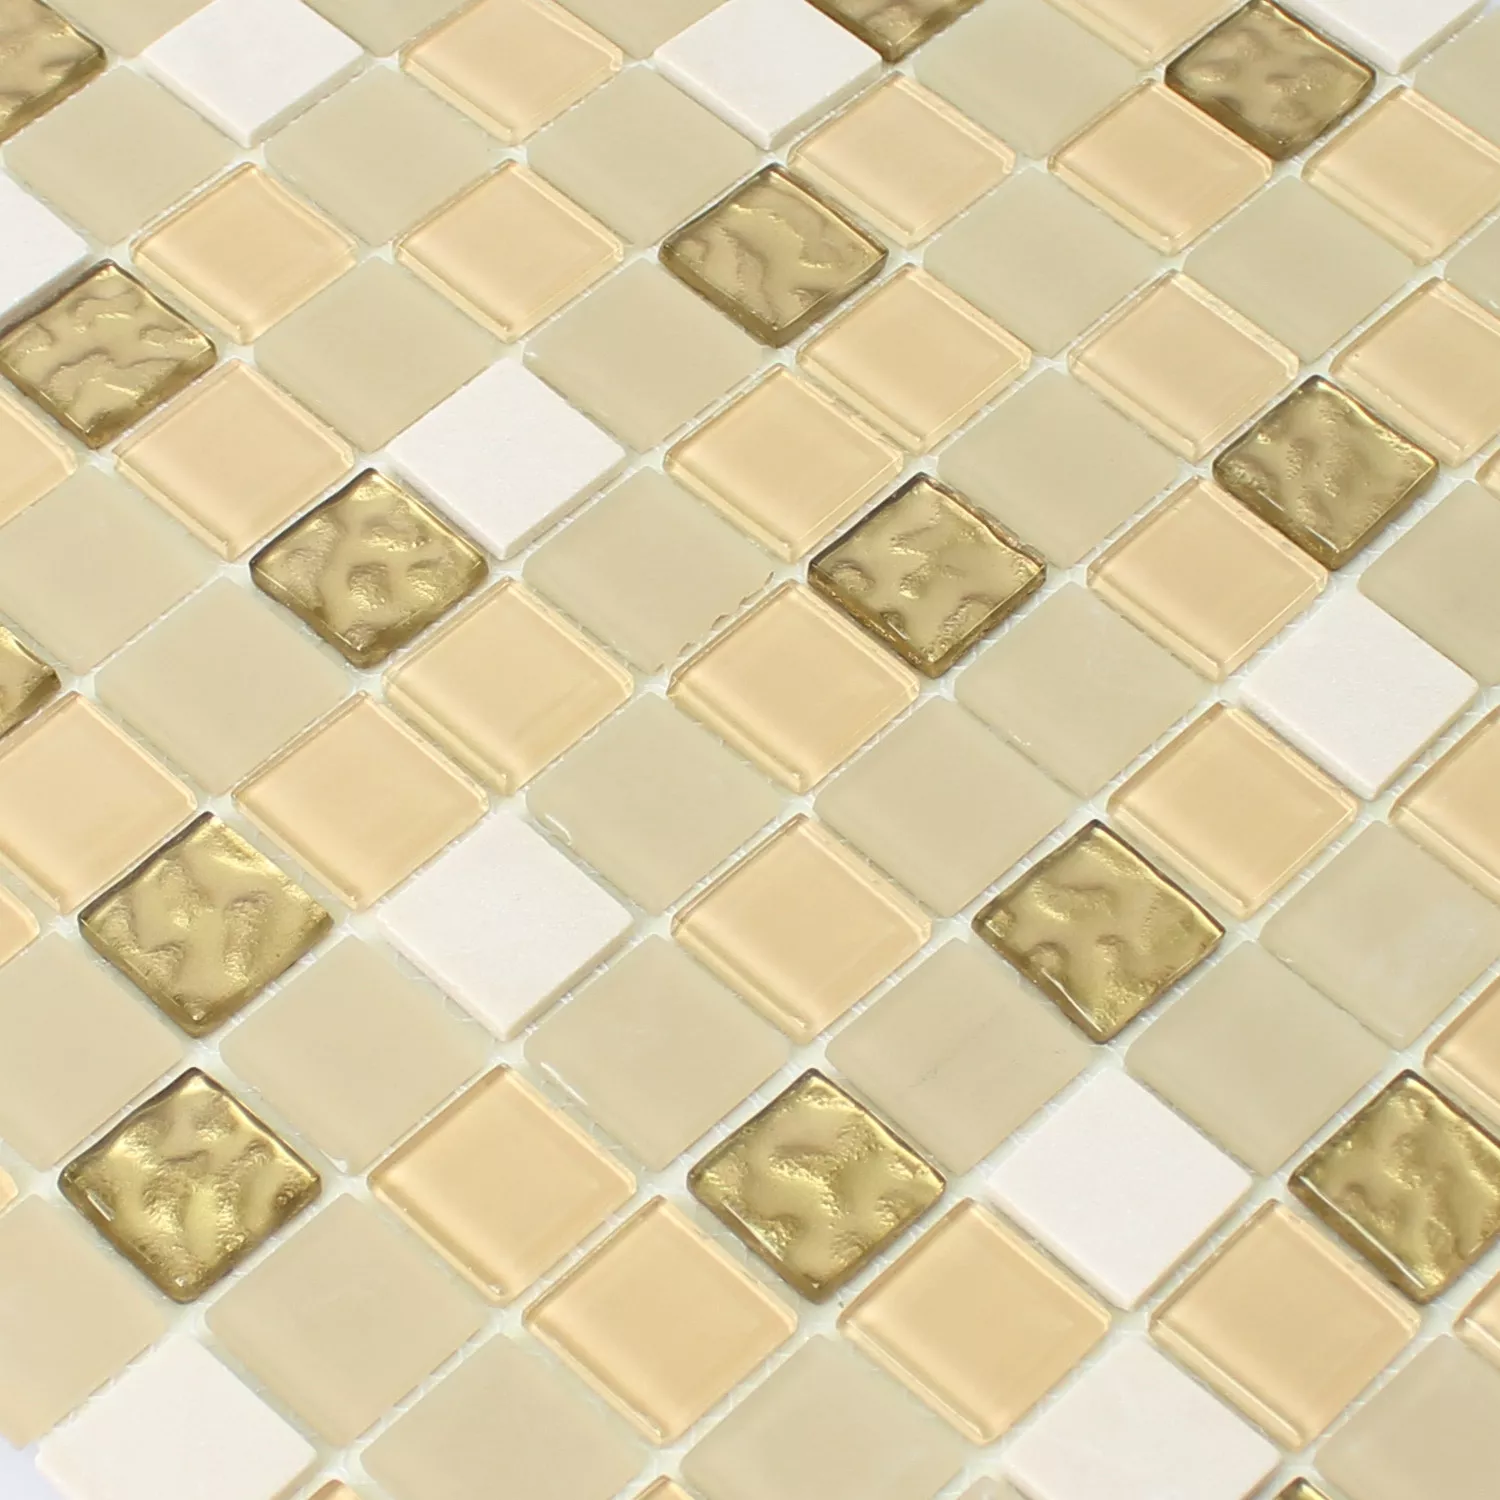 Sample Mosaic Tiles Natural Stone Glass Self Adhesive Gold